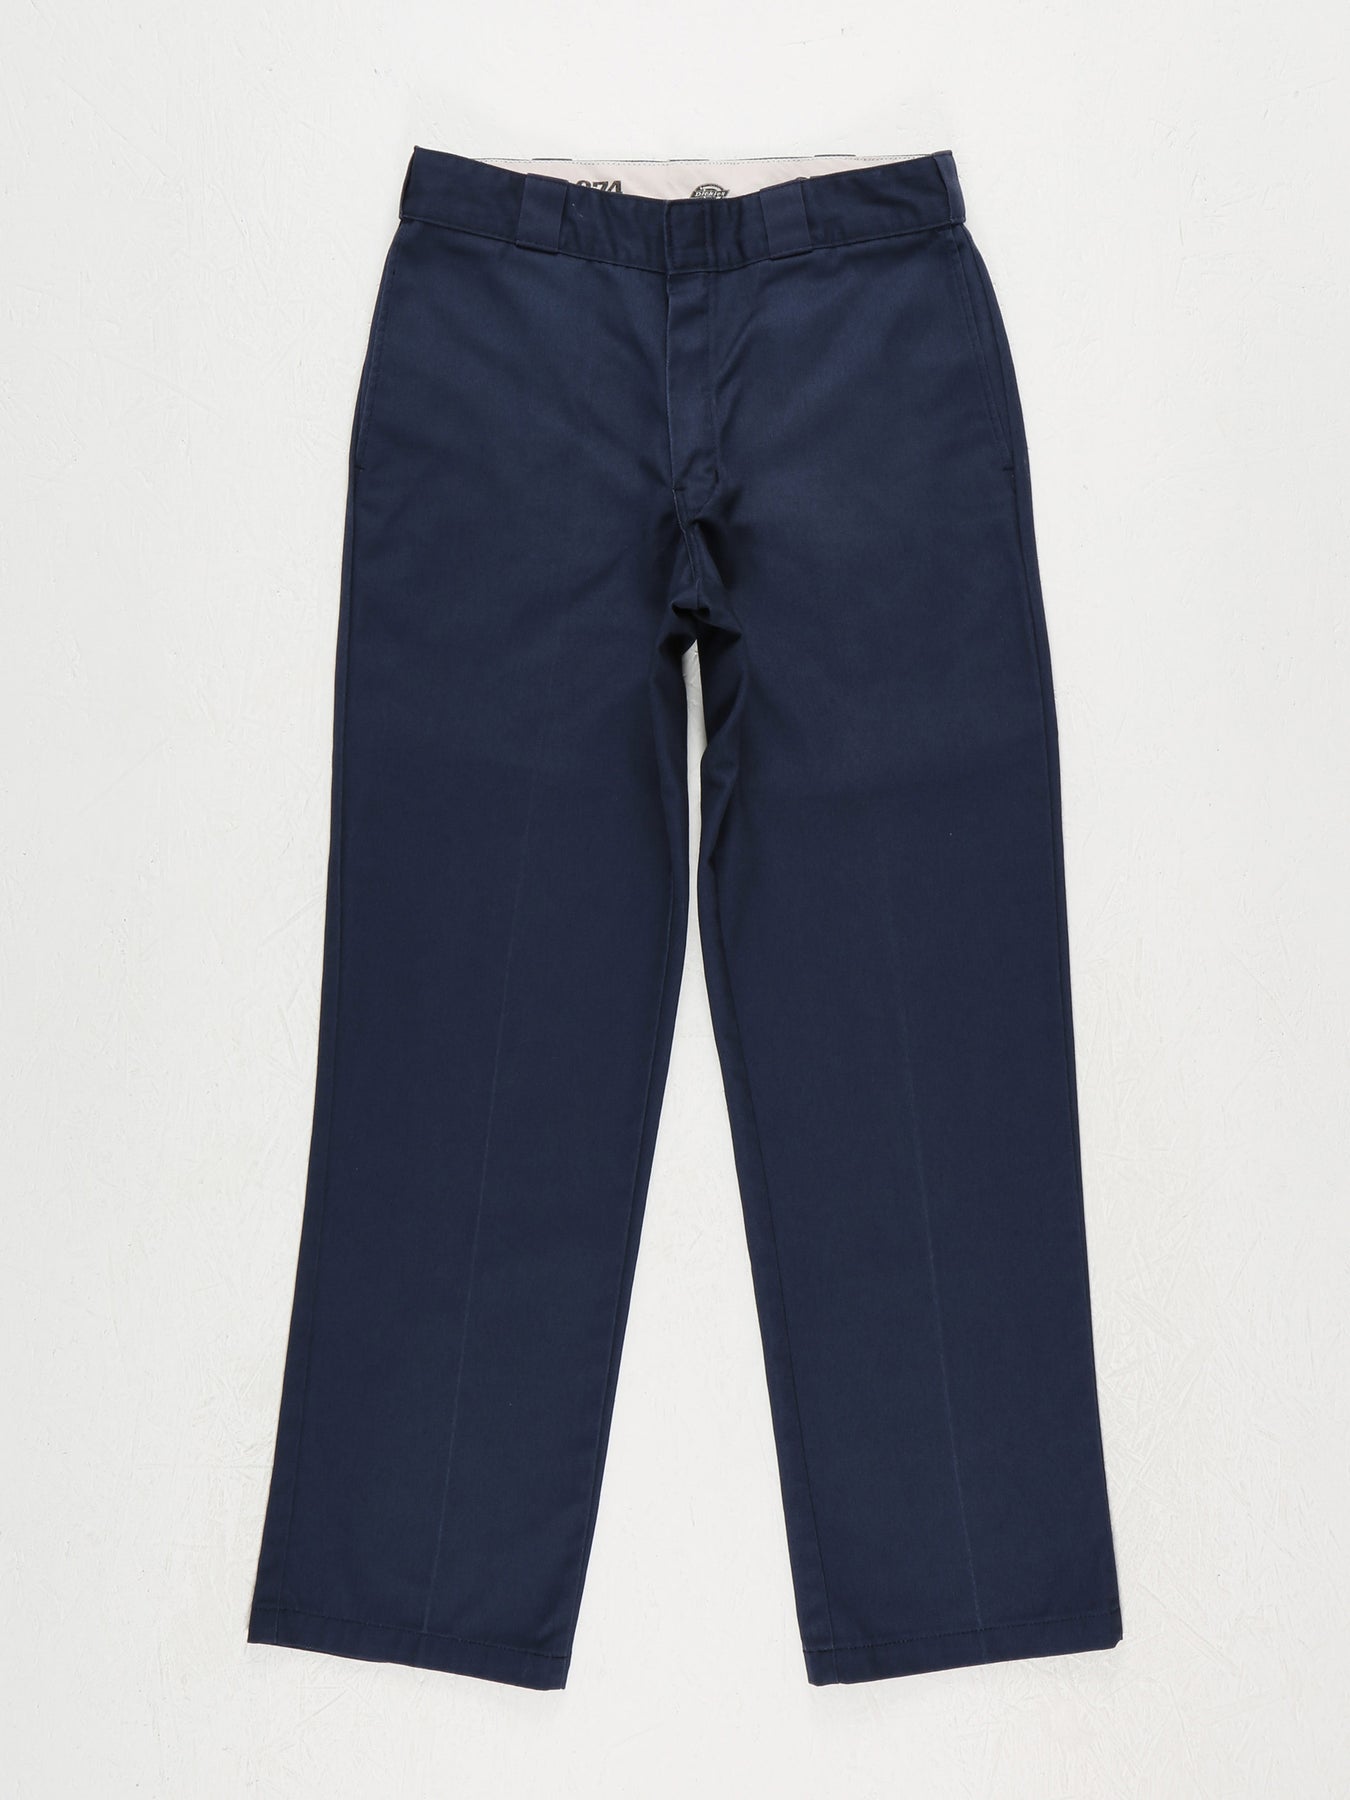 Everyday Trousers in Navy Blue  Work Trousers  Dickies UK